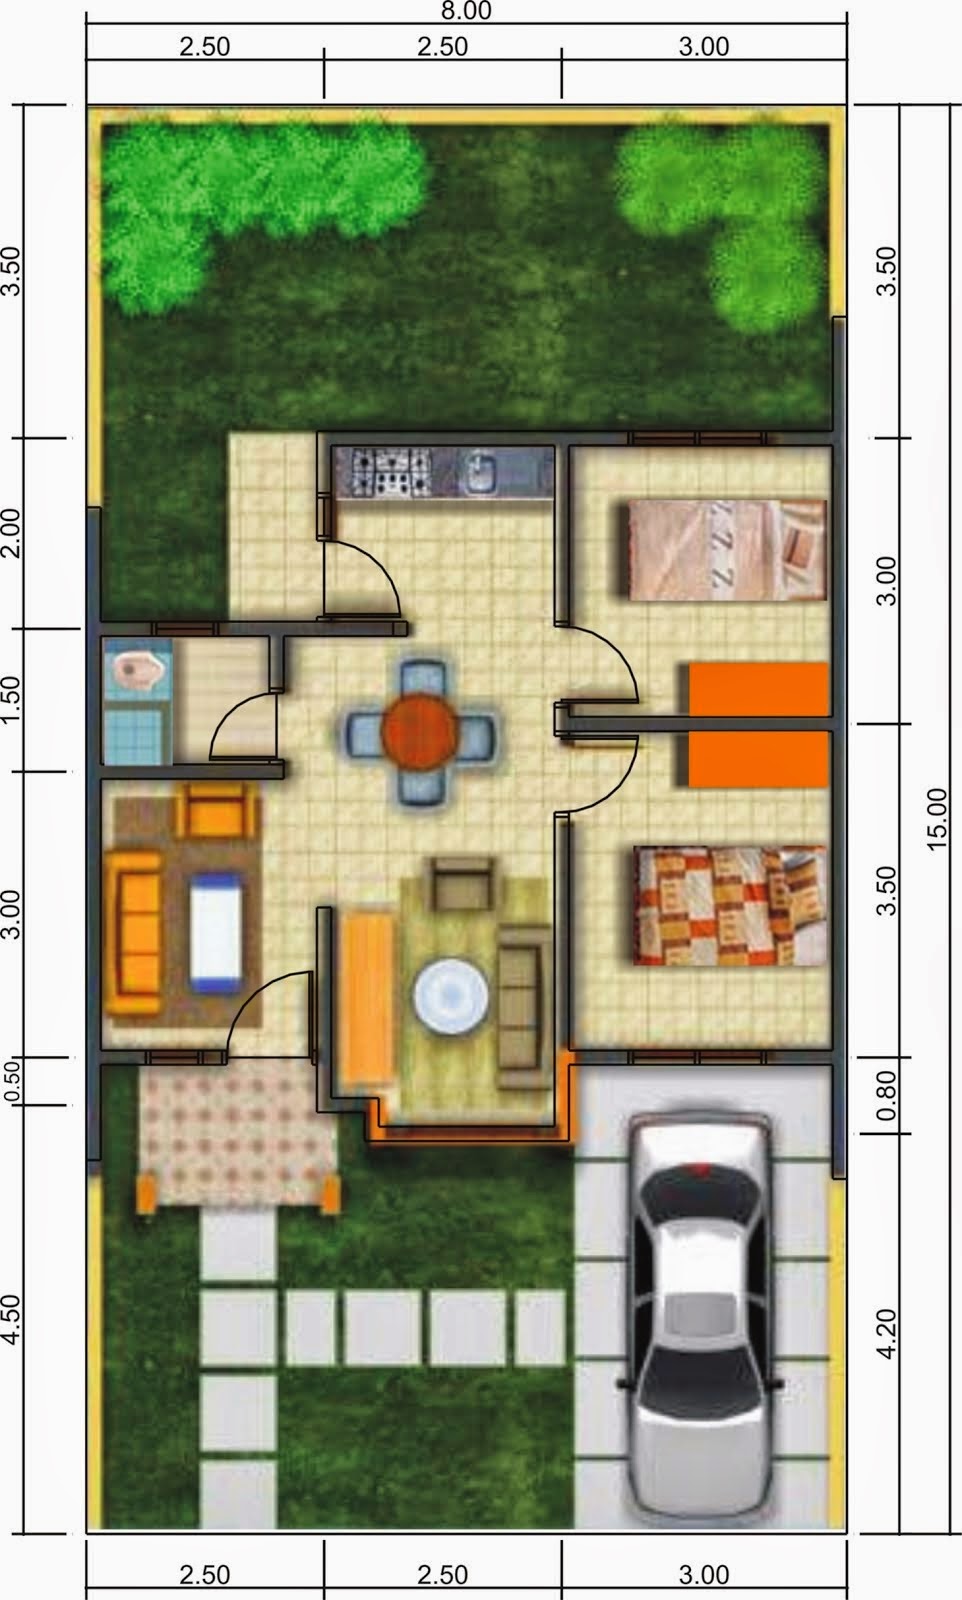 Gambar Denah Rumah Minimalis Modern 1 Lantai Terbaru 2015 